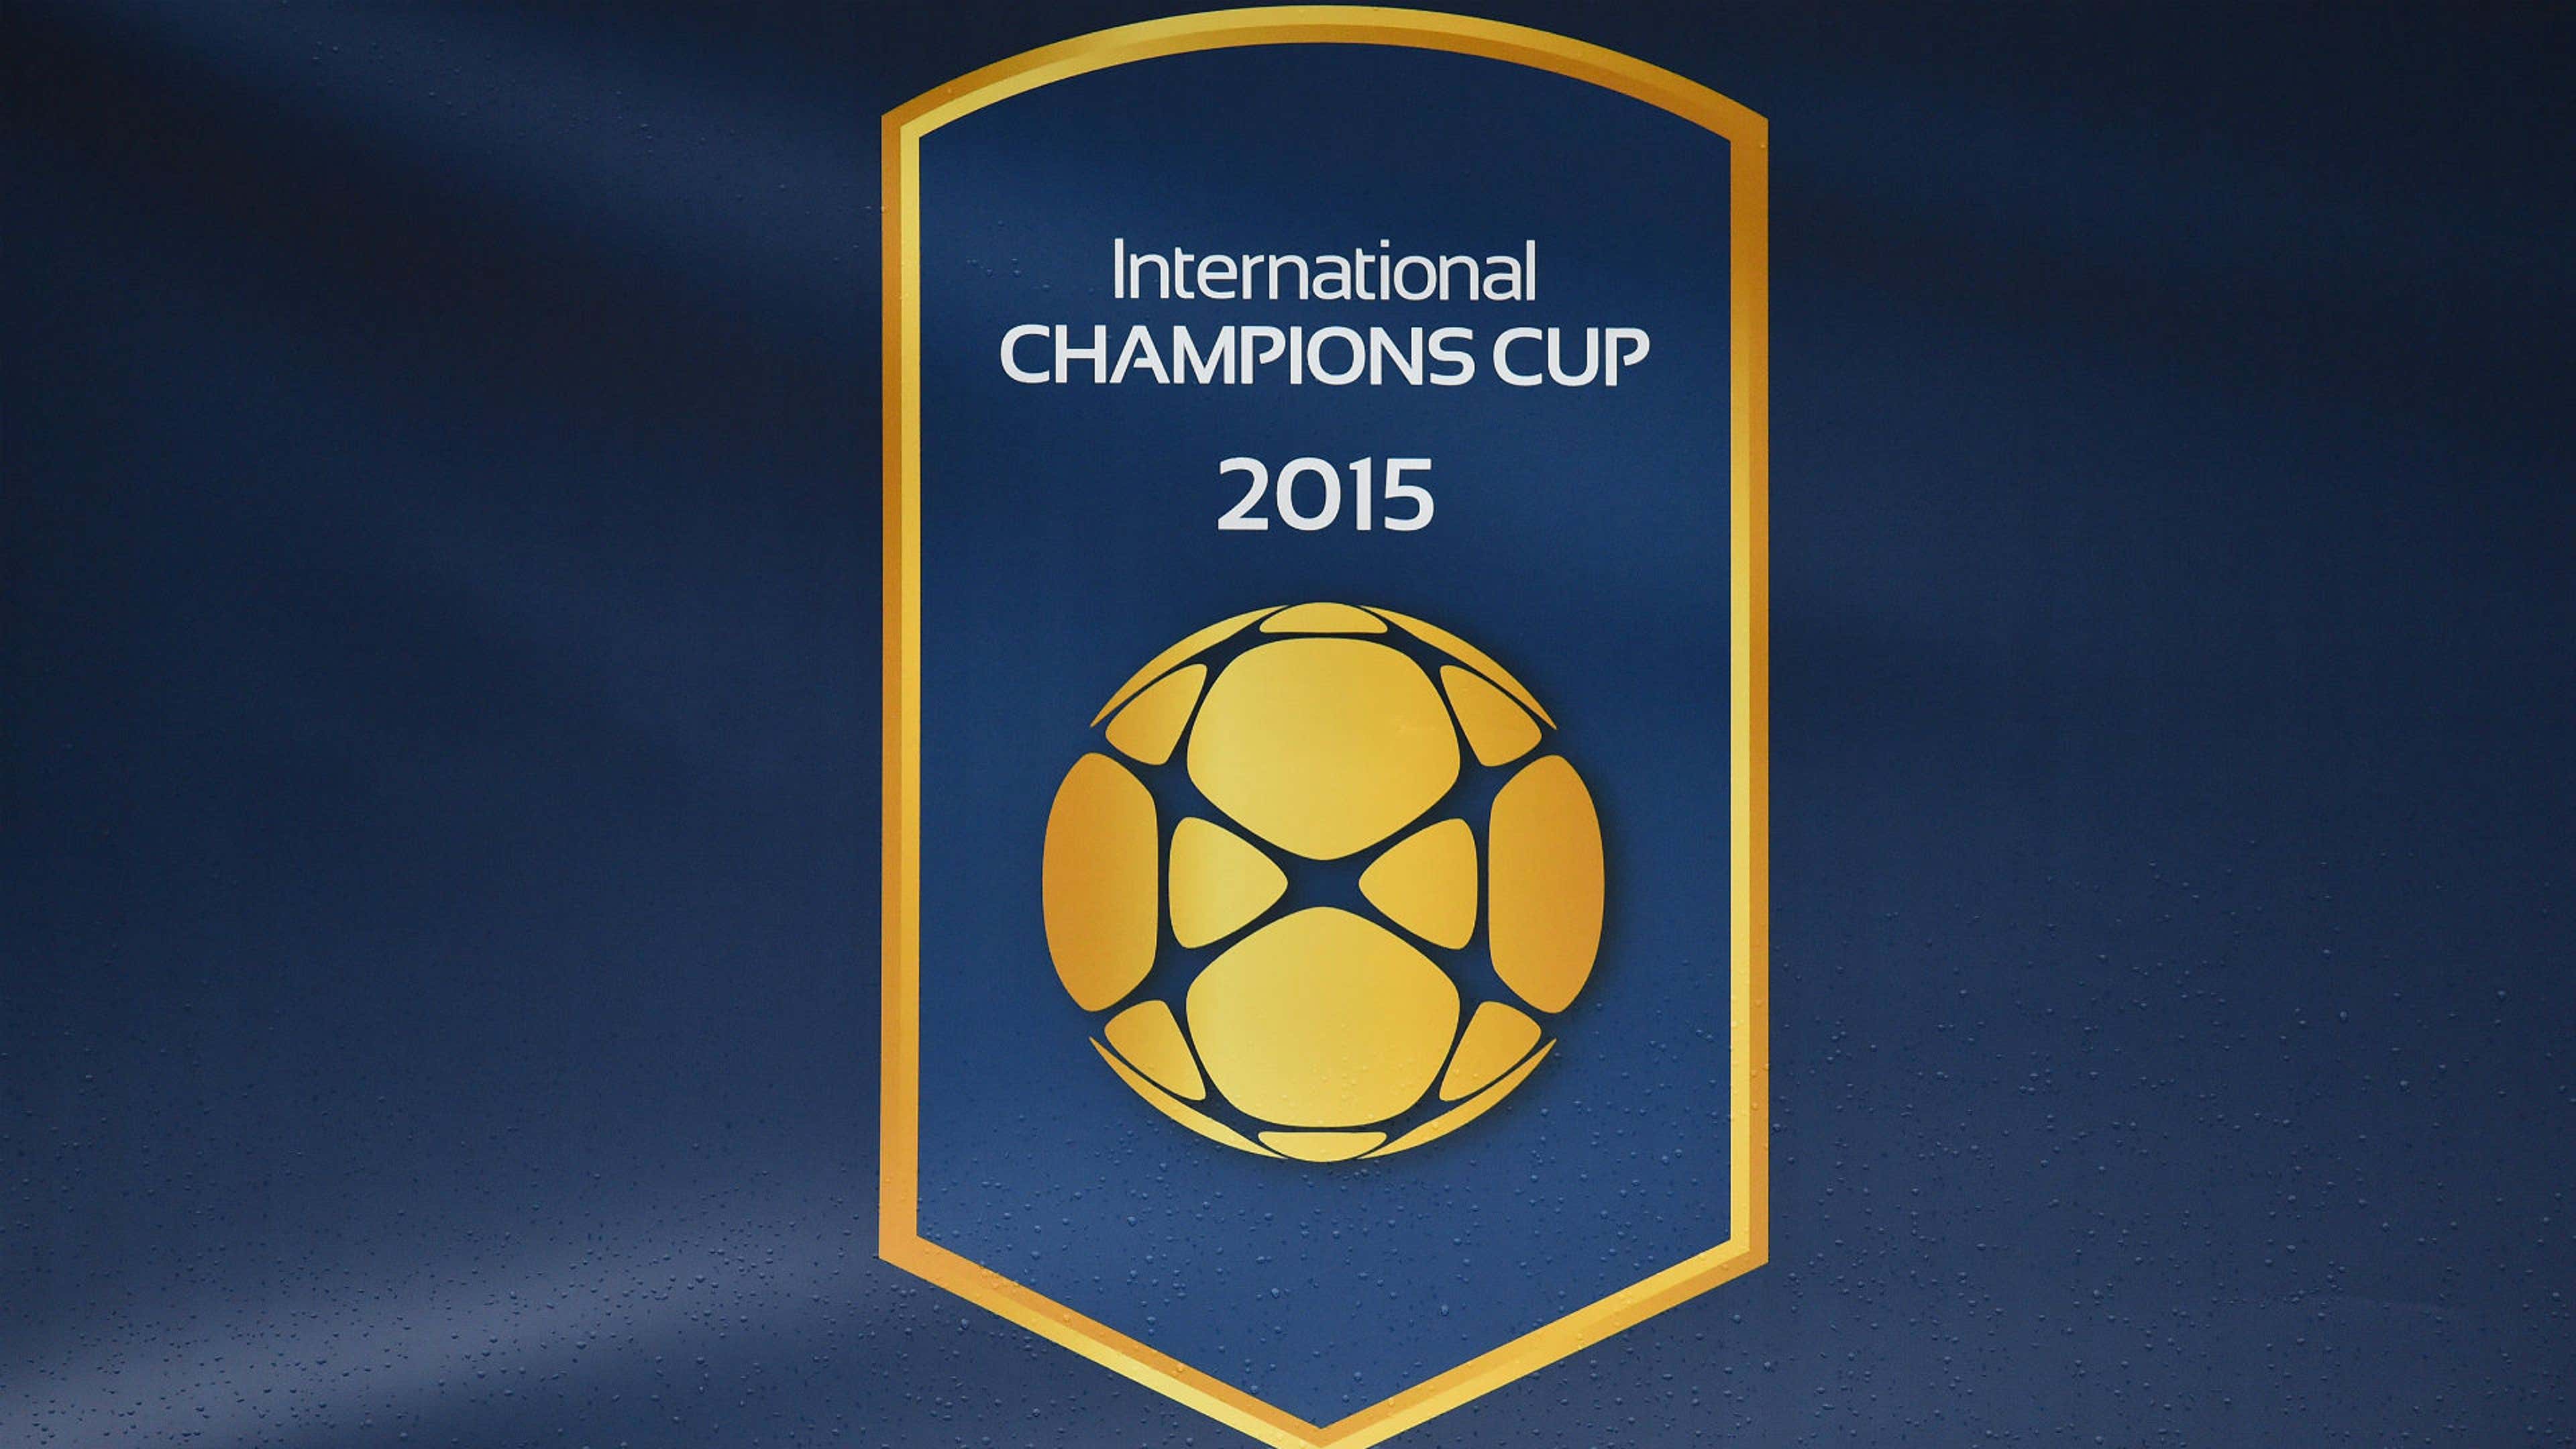 International Champions Cup 2018: International Champions Cup 2018